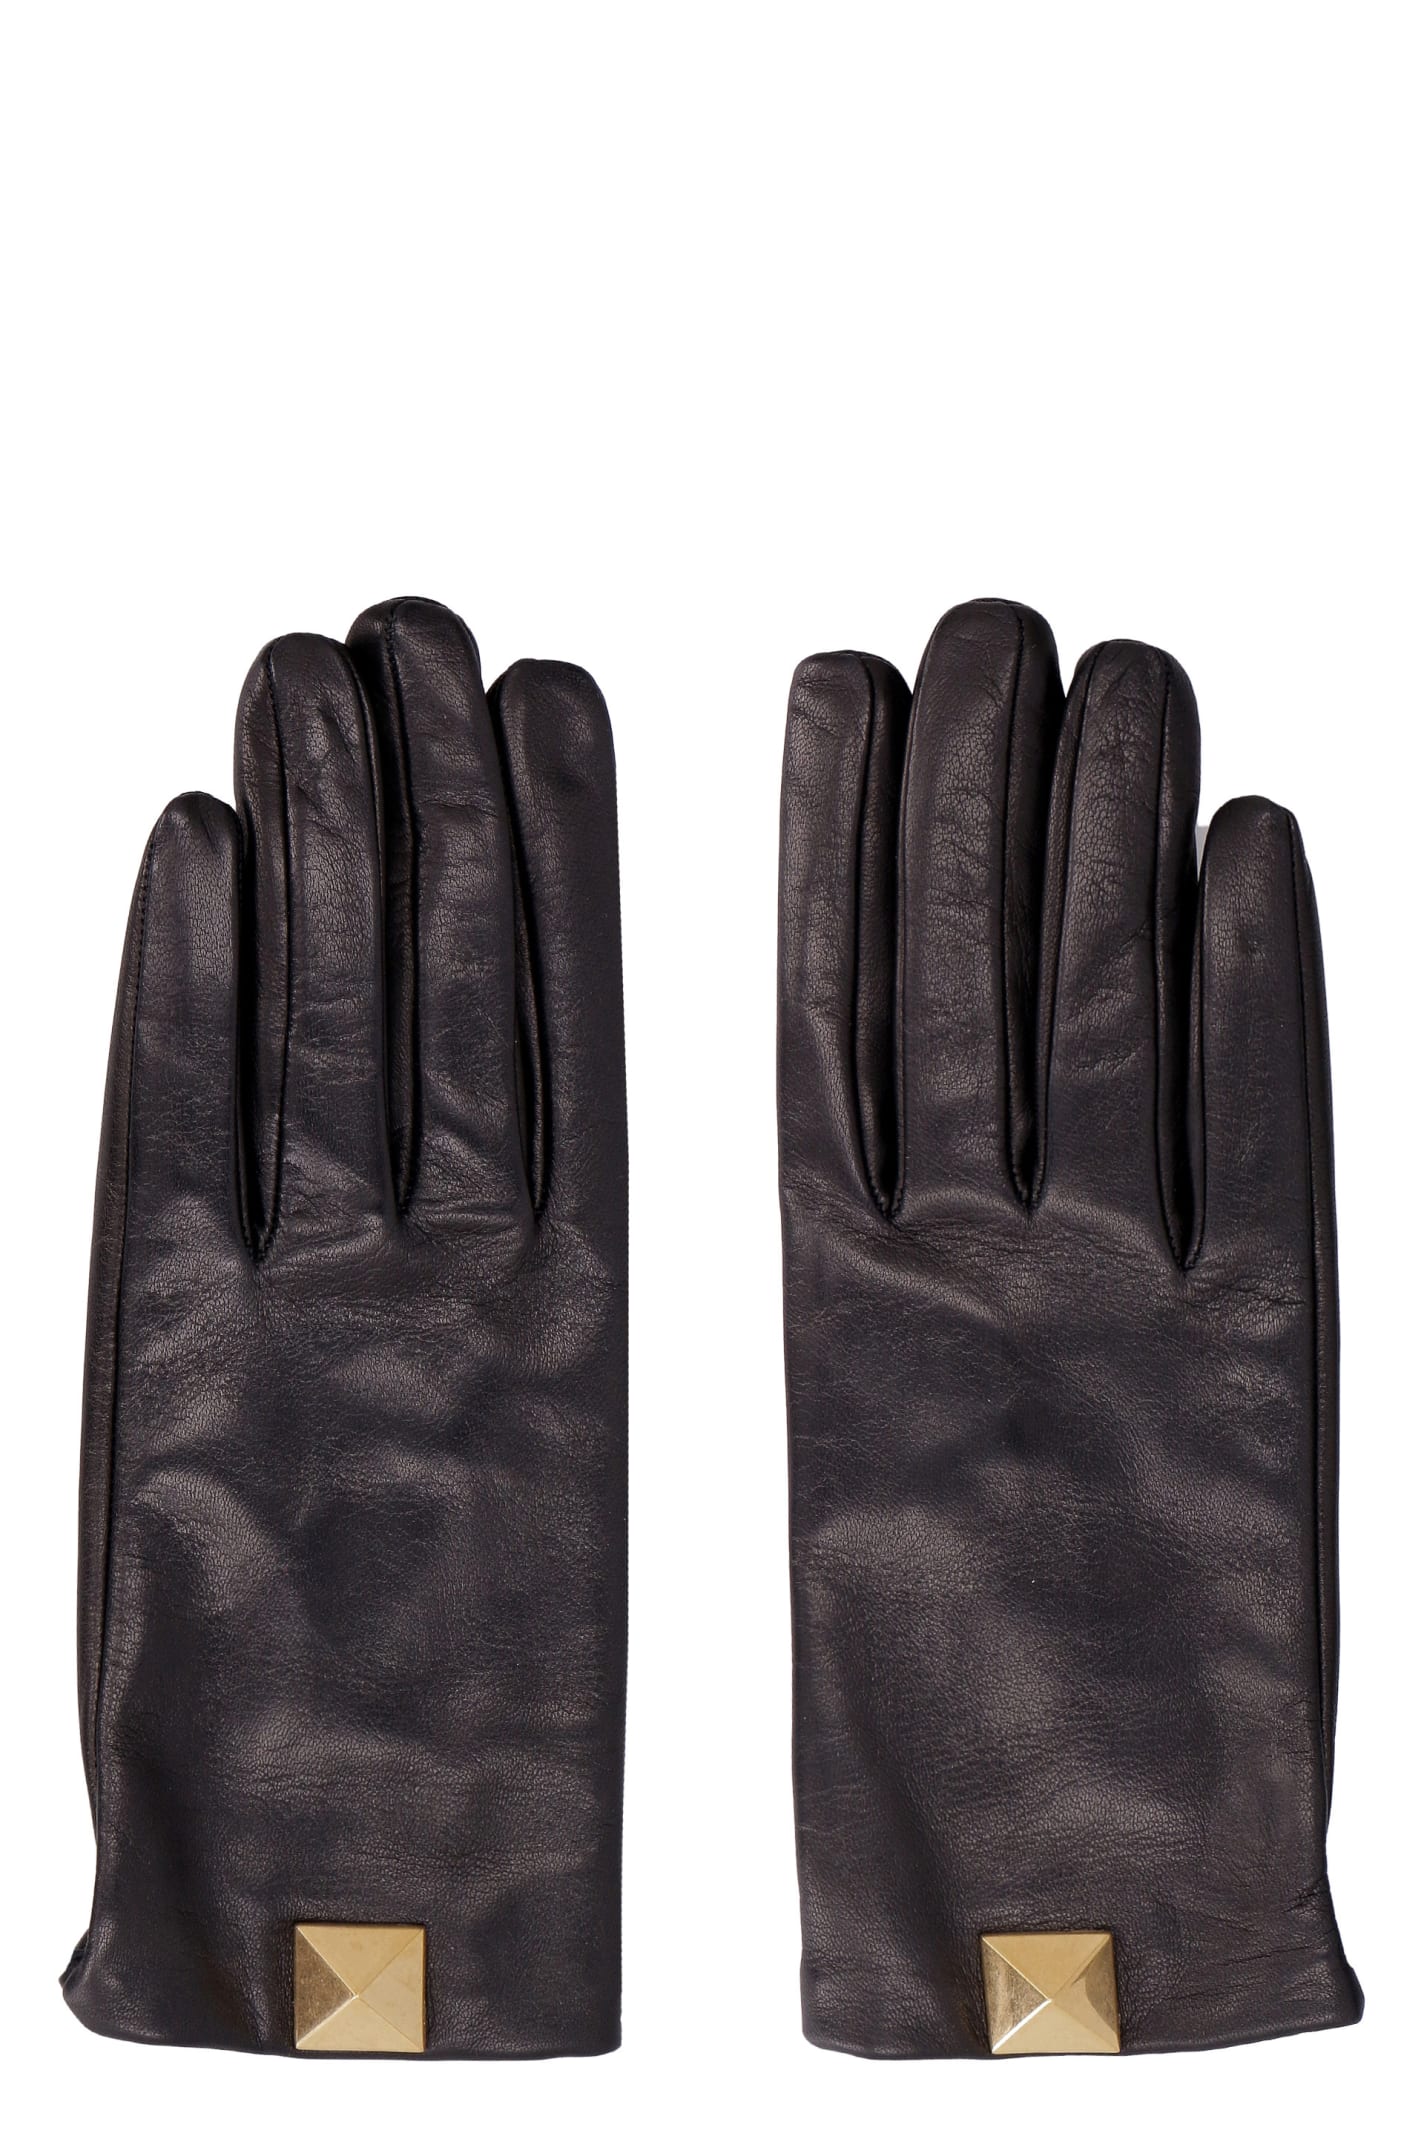 Valentino Garavani - Leather Gloves